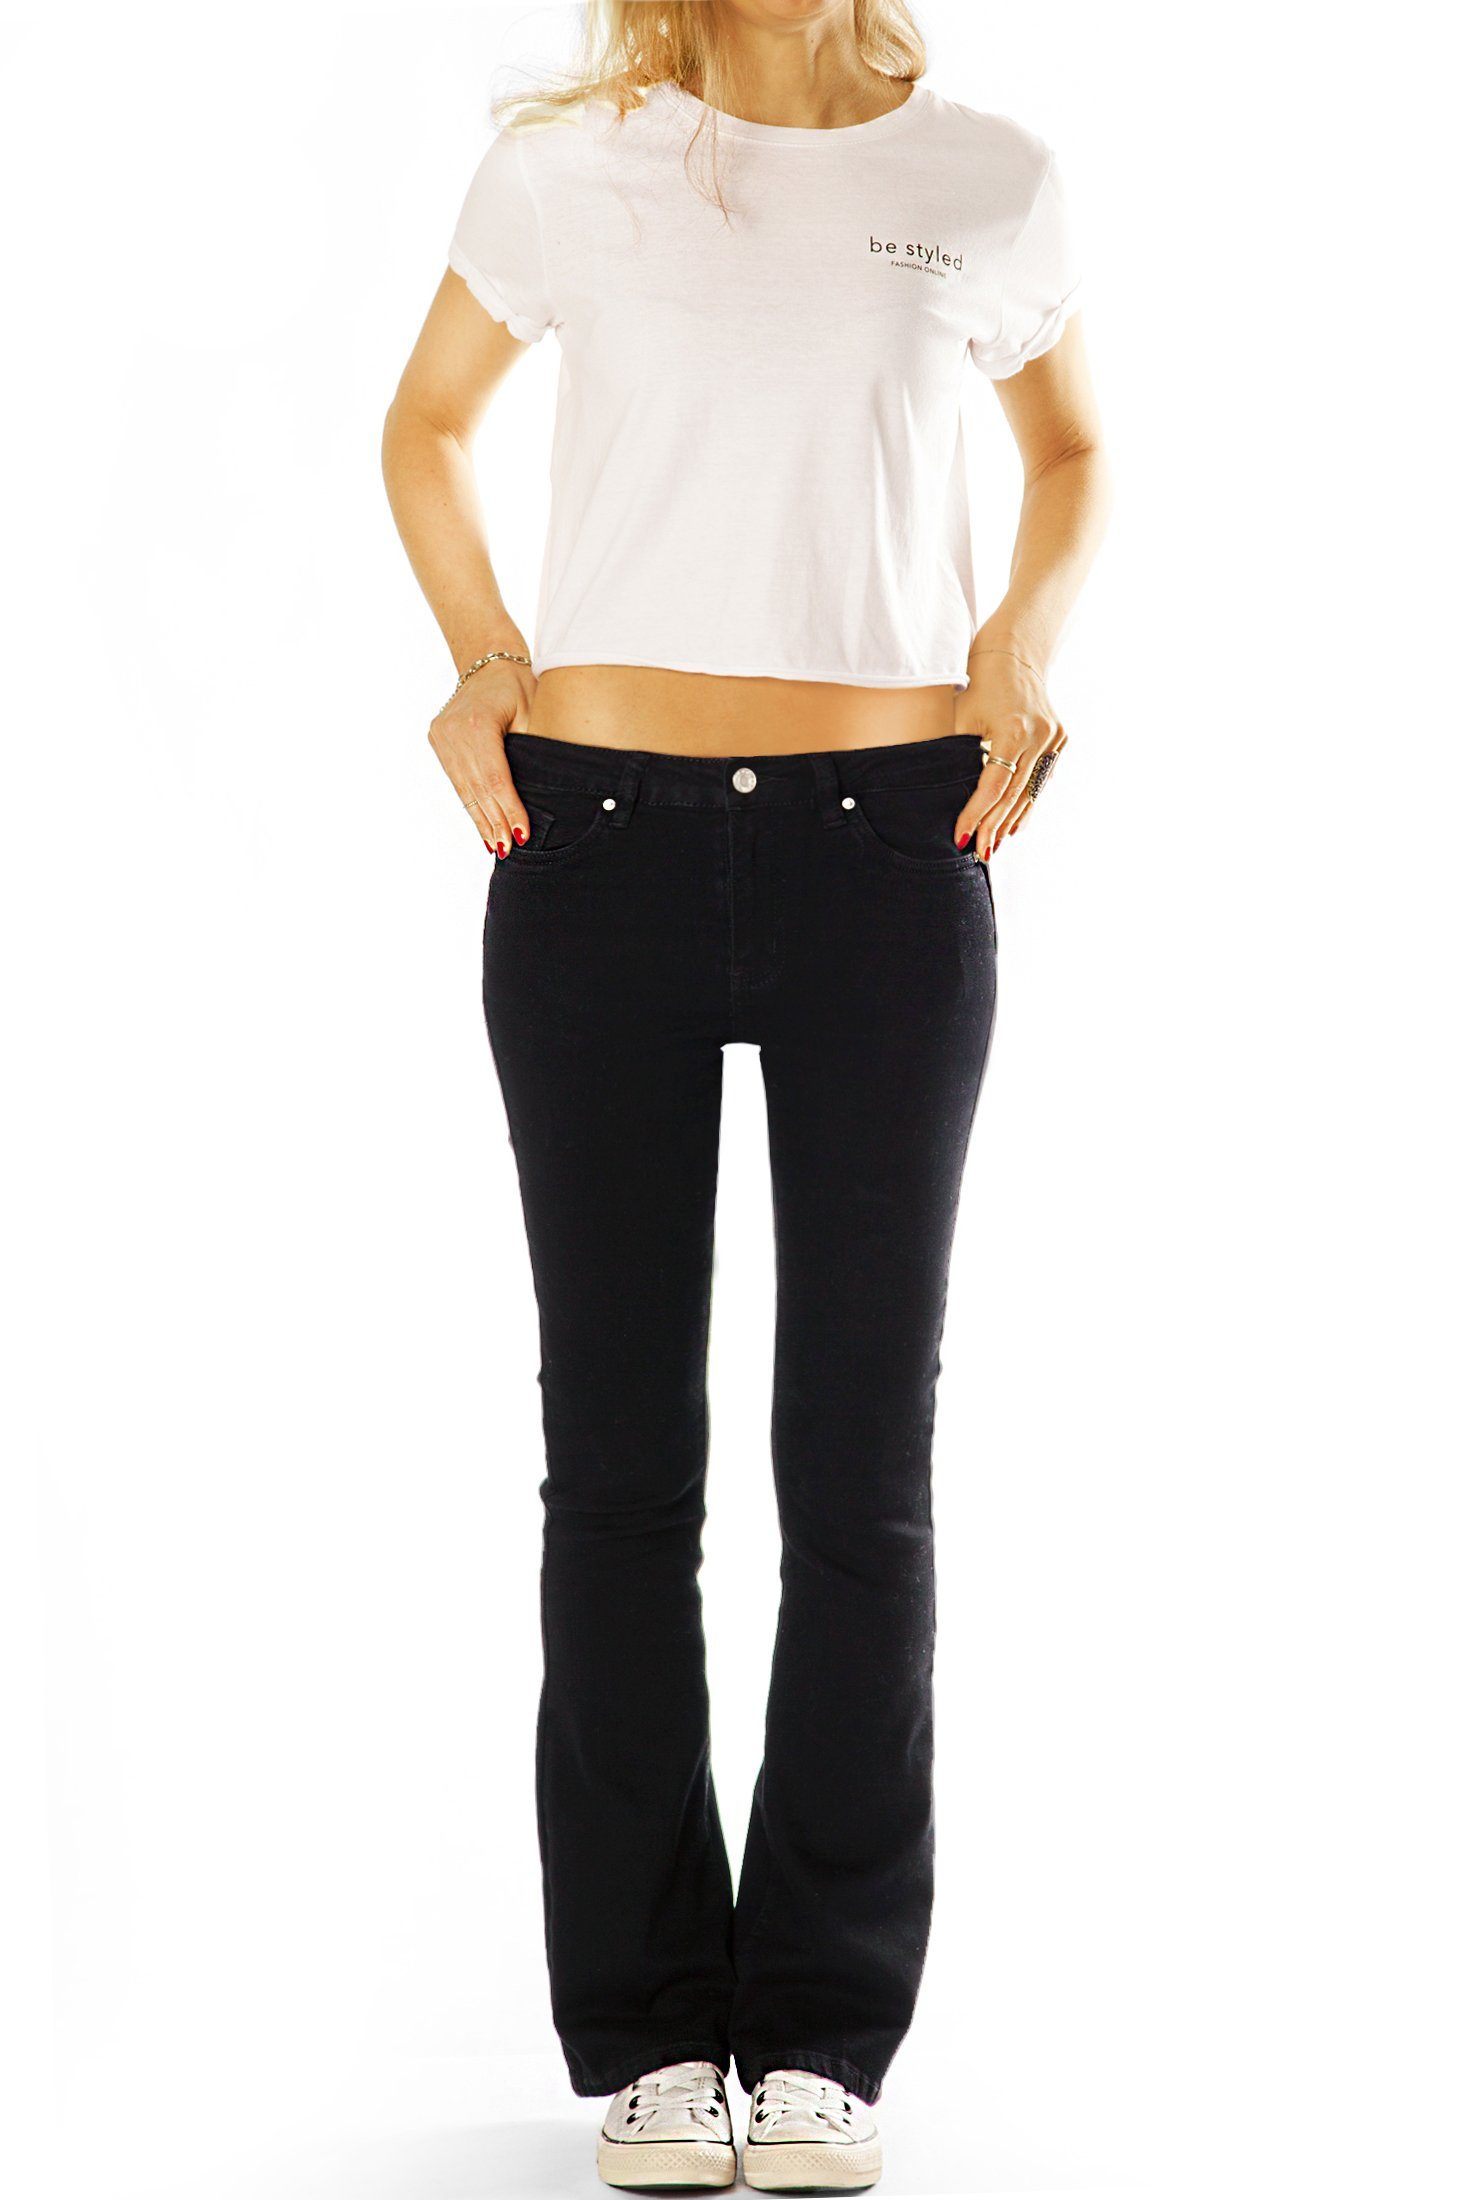 be styled Bootcut-Jeans Jeans - Basic Cut waist, medium Boot j2L-1 Hose Schlag stretchig Waist Stretch-Anteil, Damen Medium mit bequem, 5-Pocket-Style, im